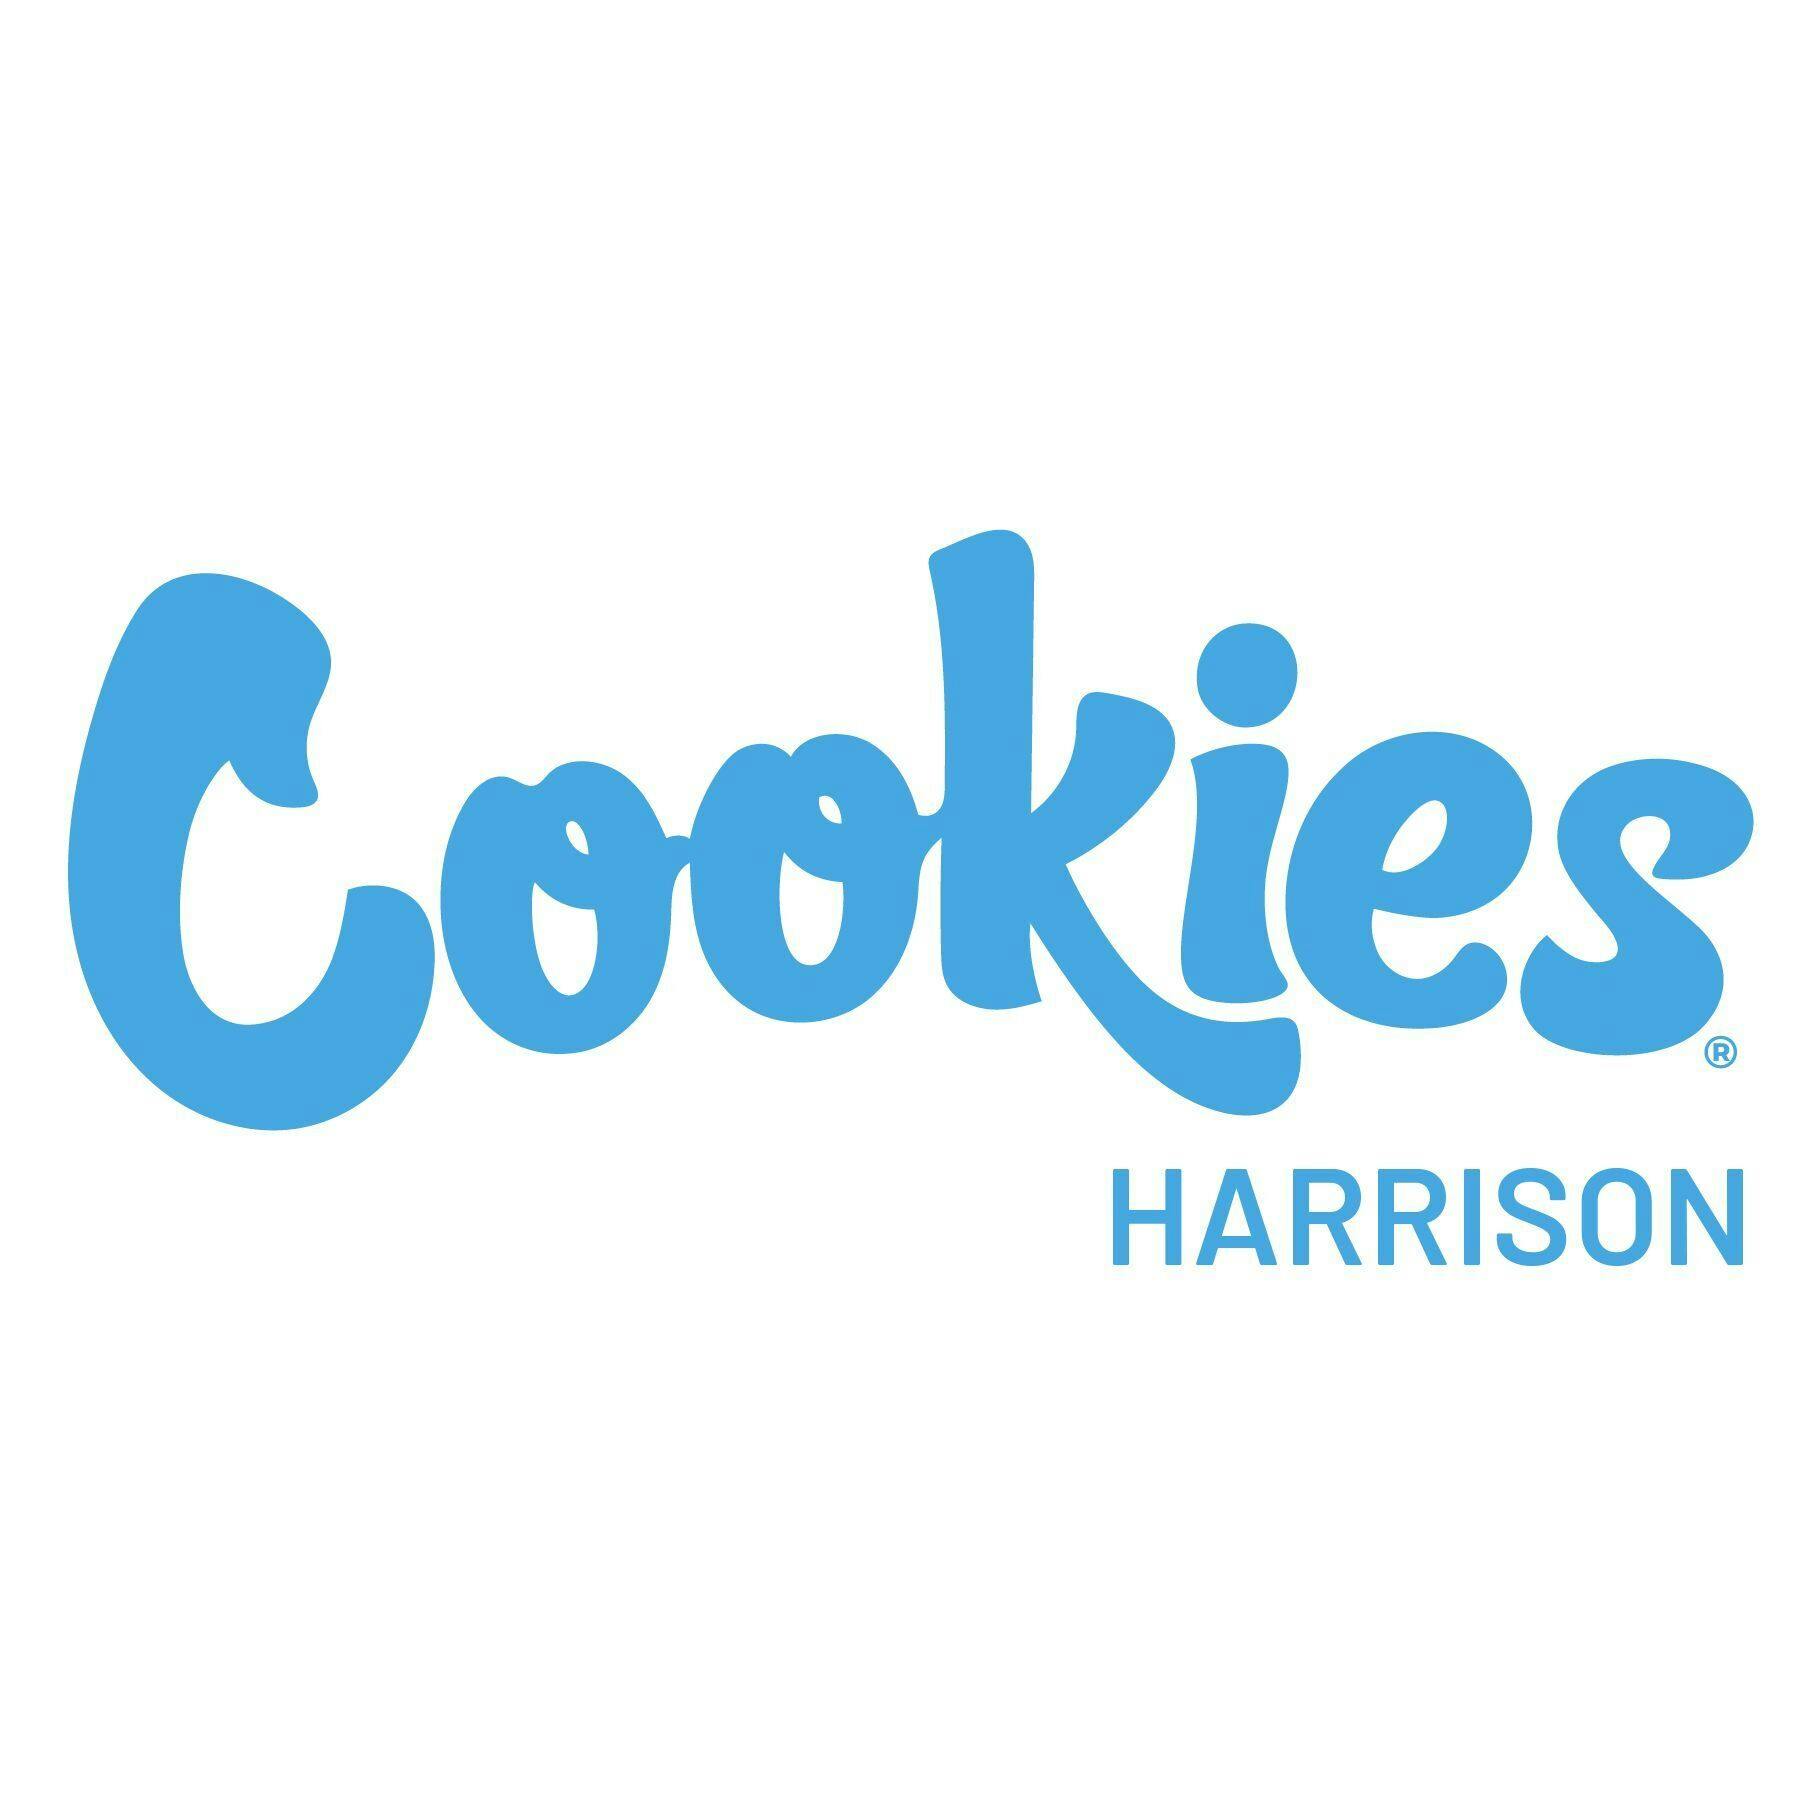 Cookies Harrison logo